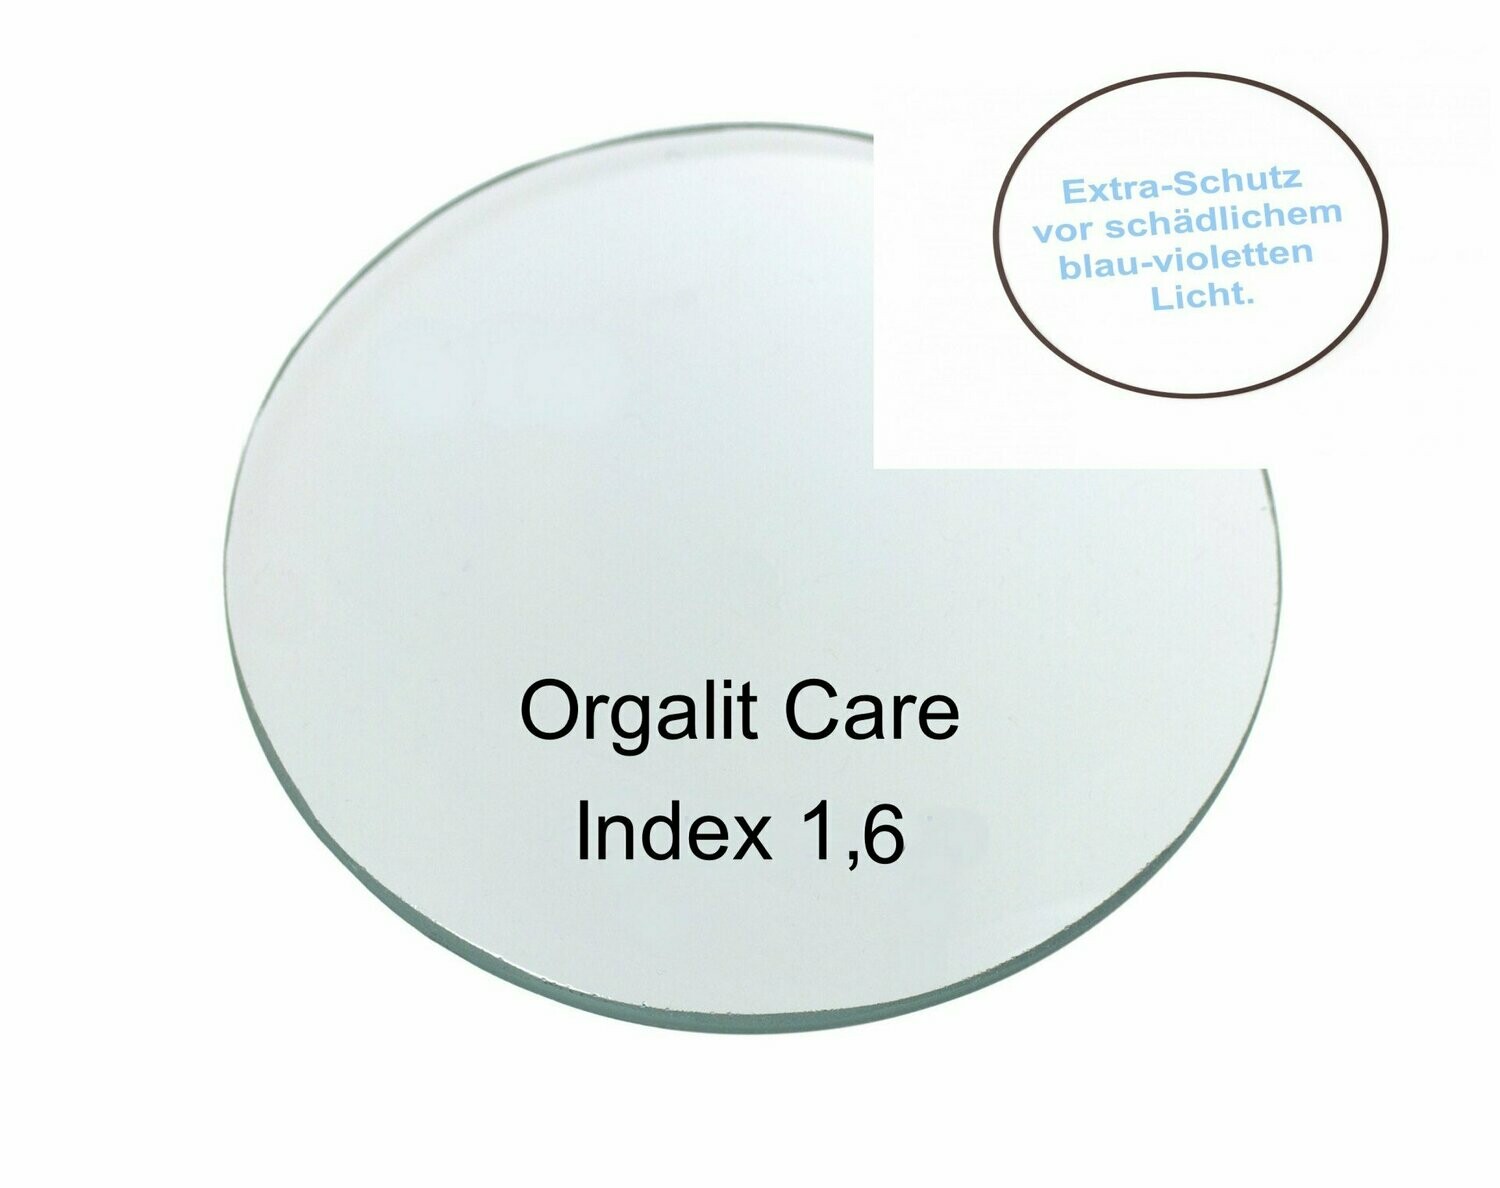 Einstärken Kunststoffglaspaar Orgalit Care Index 1,6 HSET